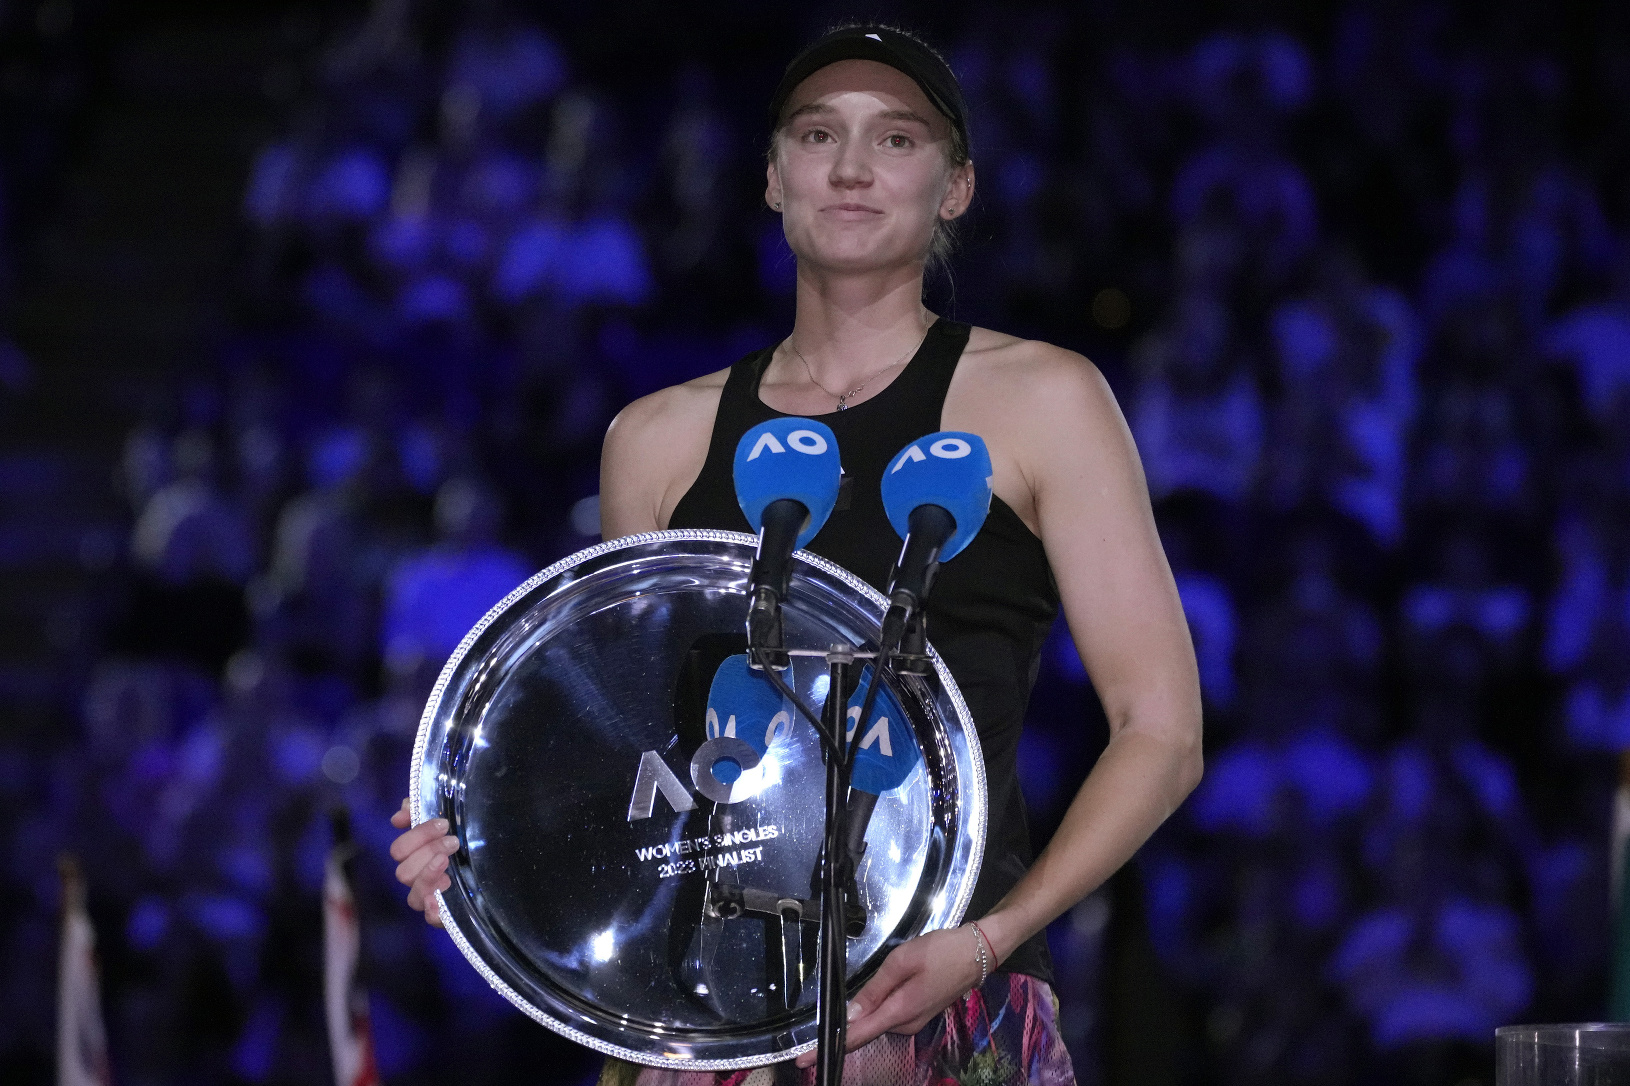 Jelena Rybakinová s trofejou